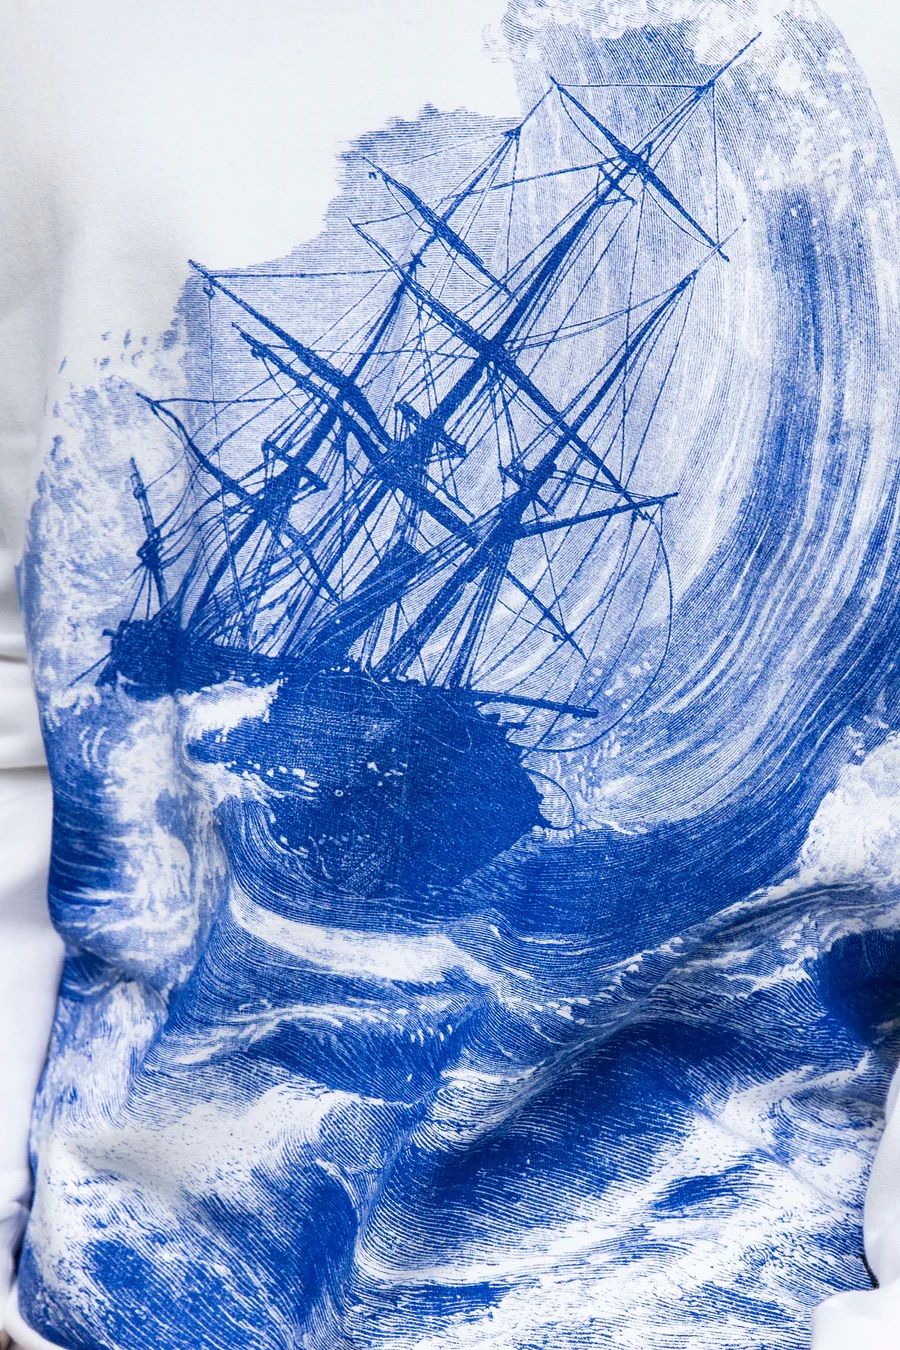 Ship print sweatshirt during the storm - Misericordia